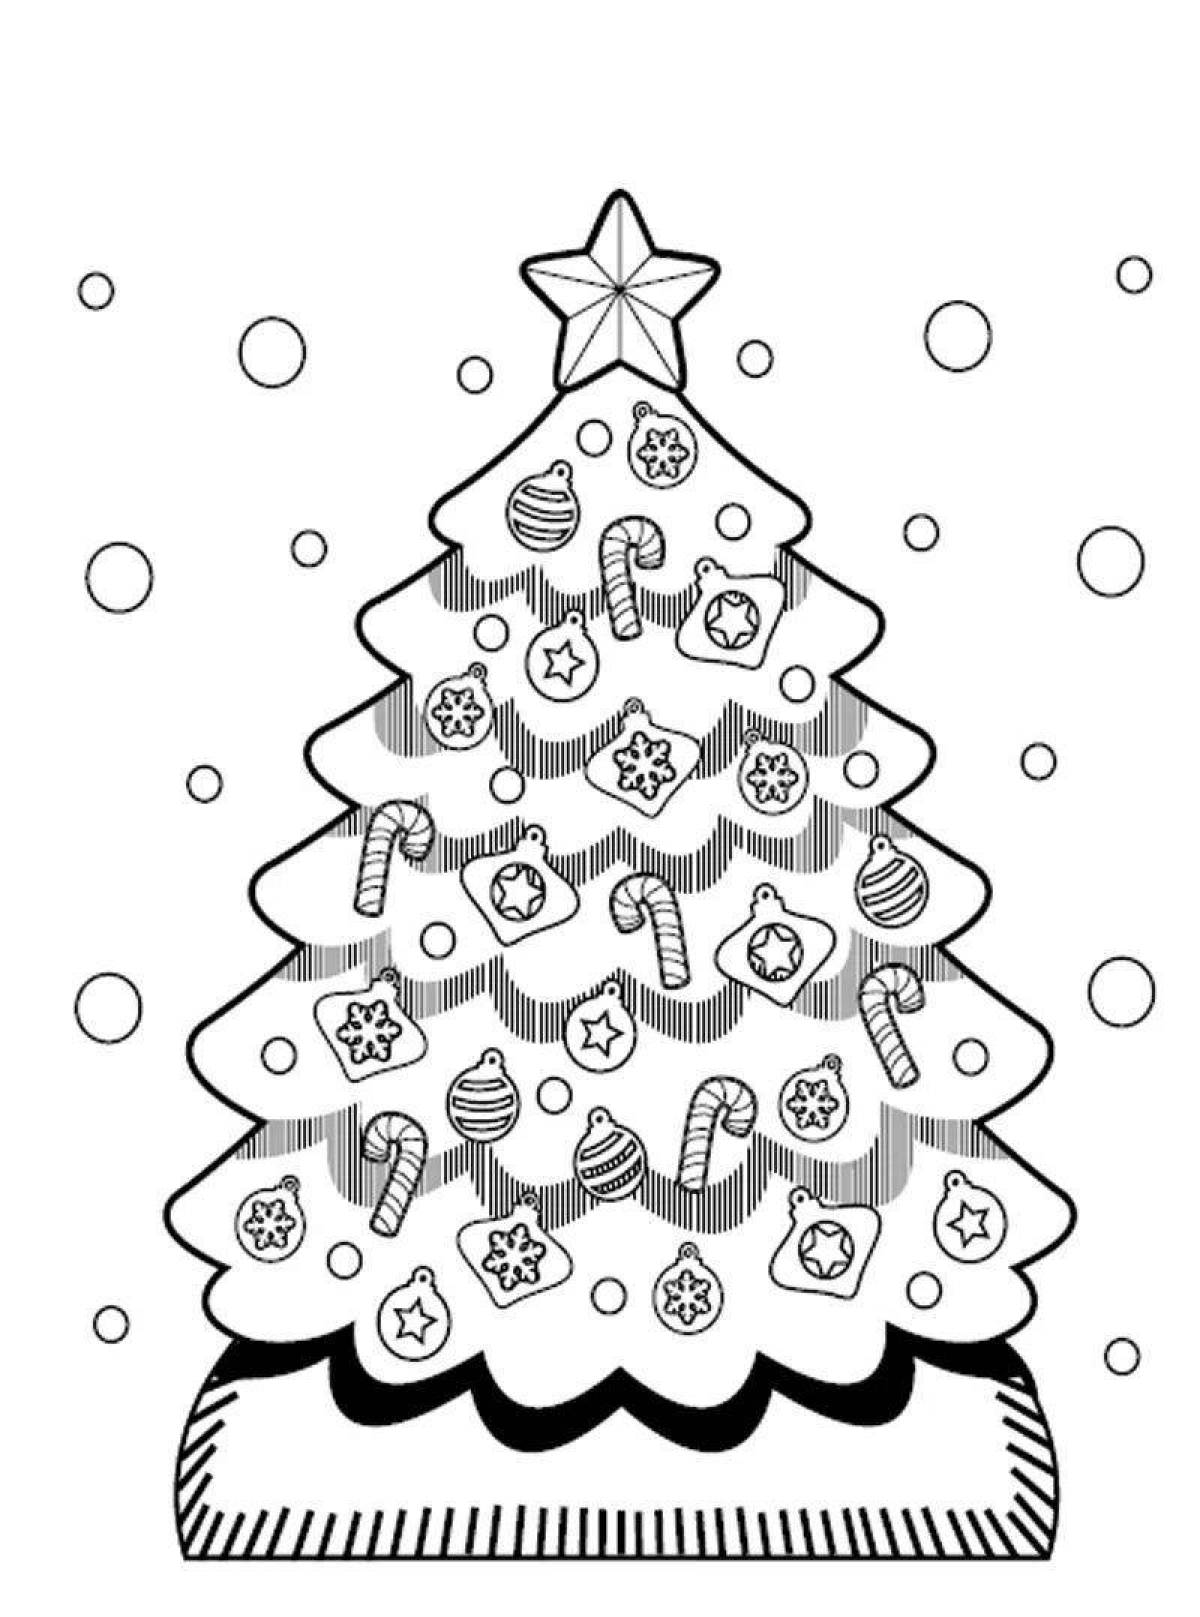 Fun Christmas tree coloring card